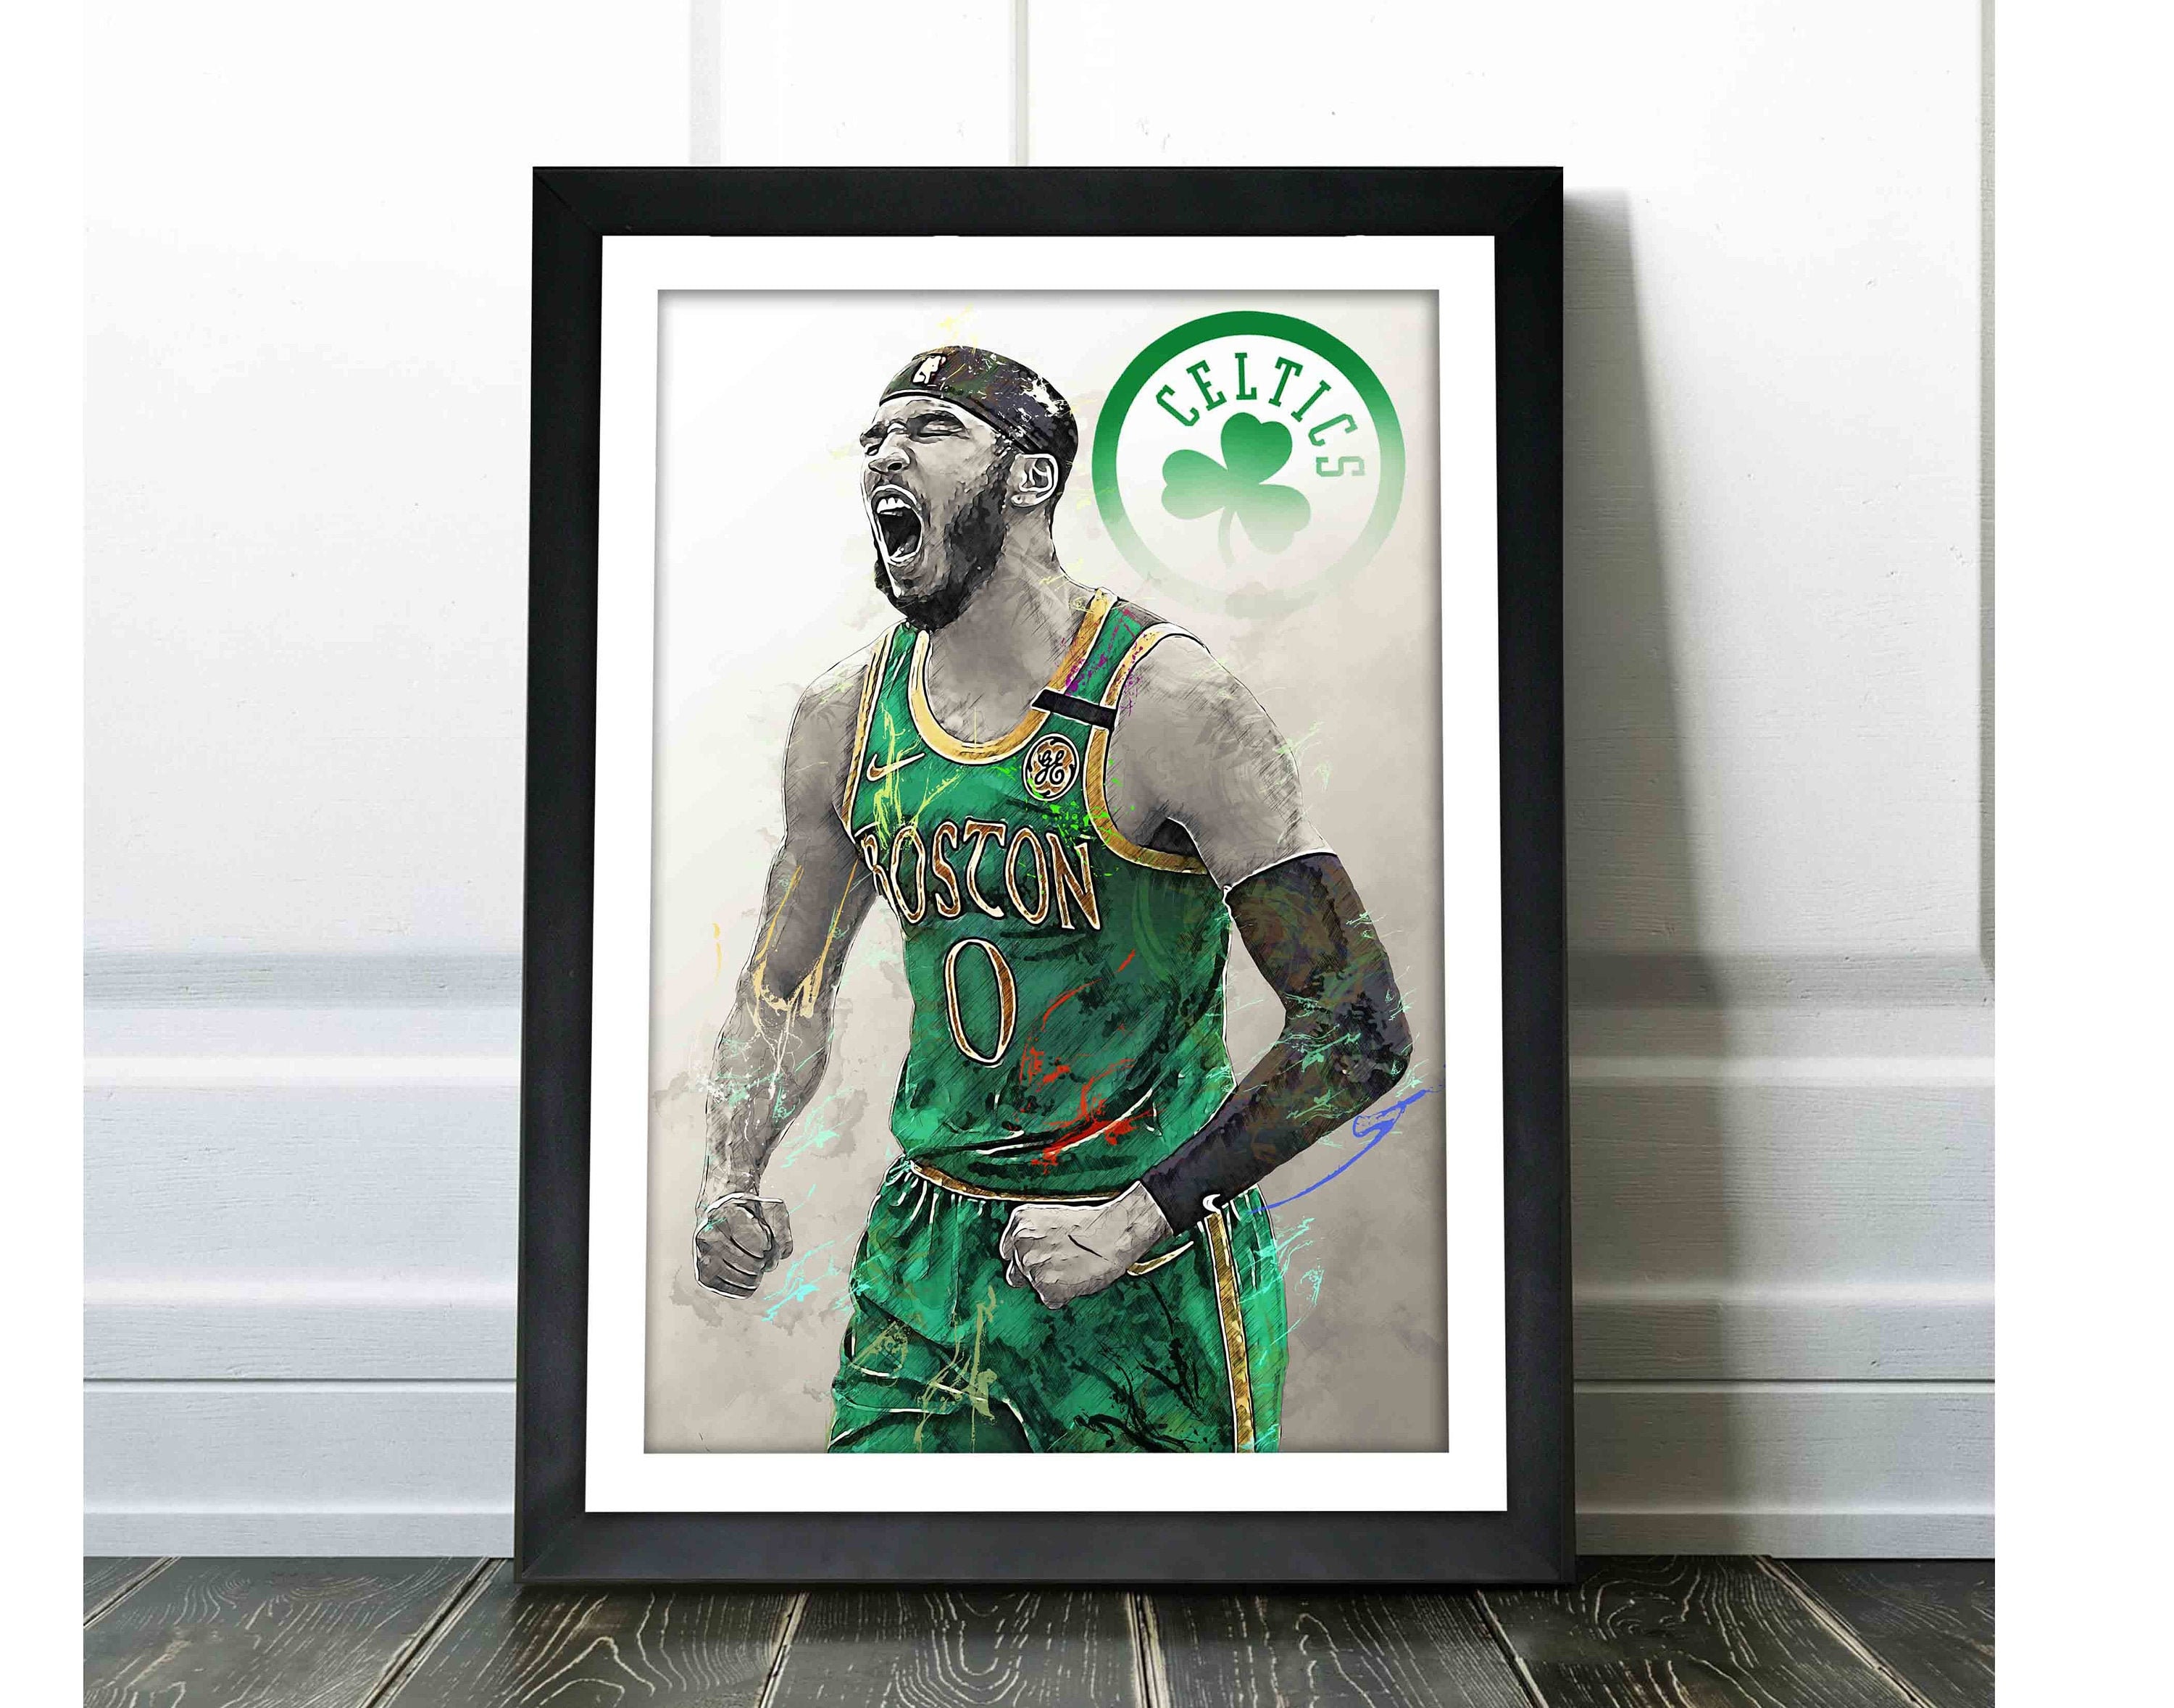 Boston Celtics on X: JT's rocking the City Edition uniform